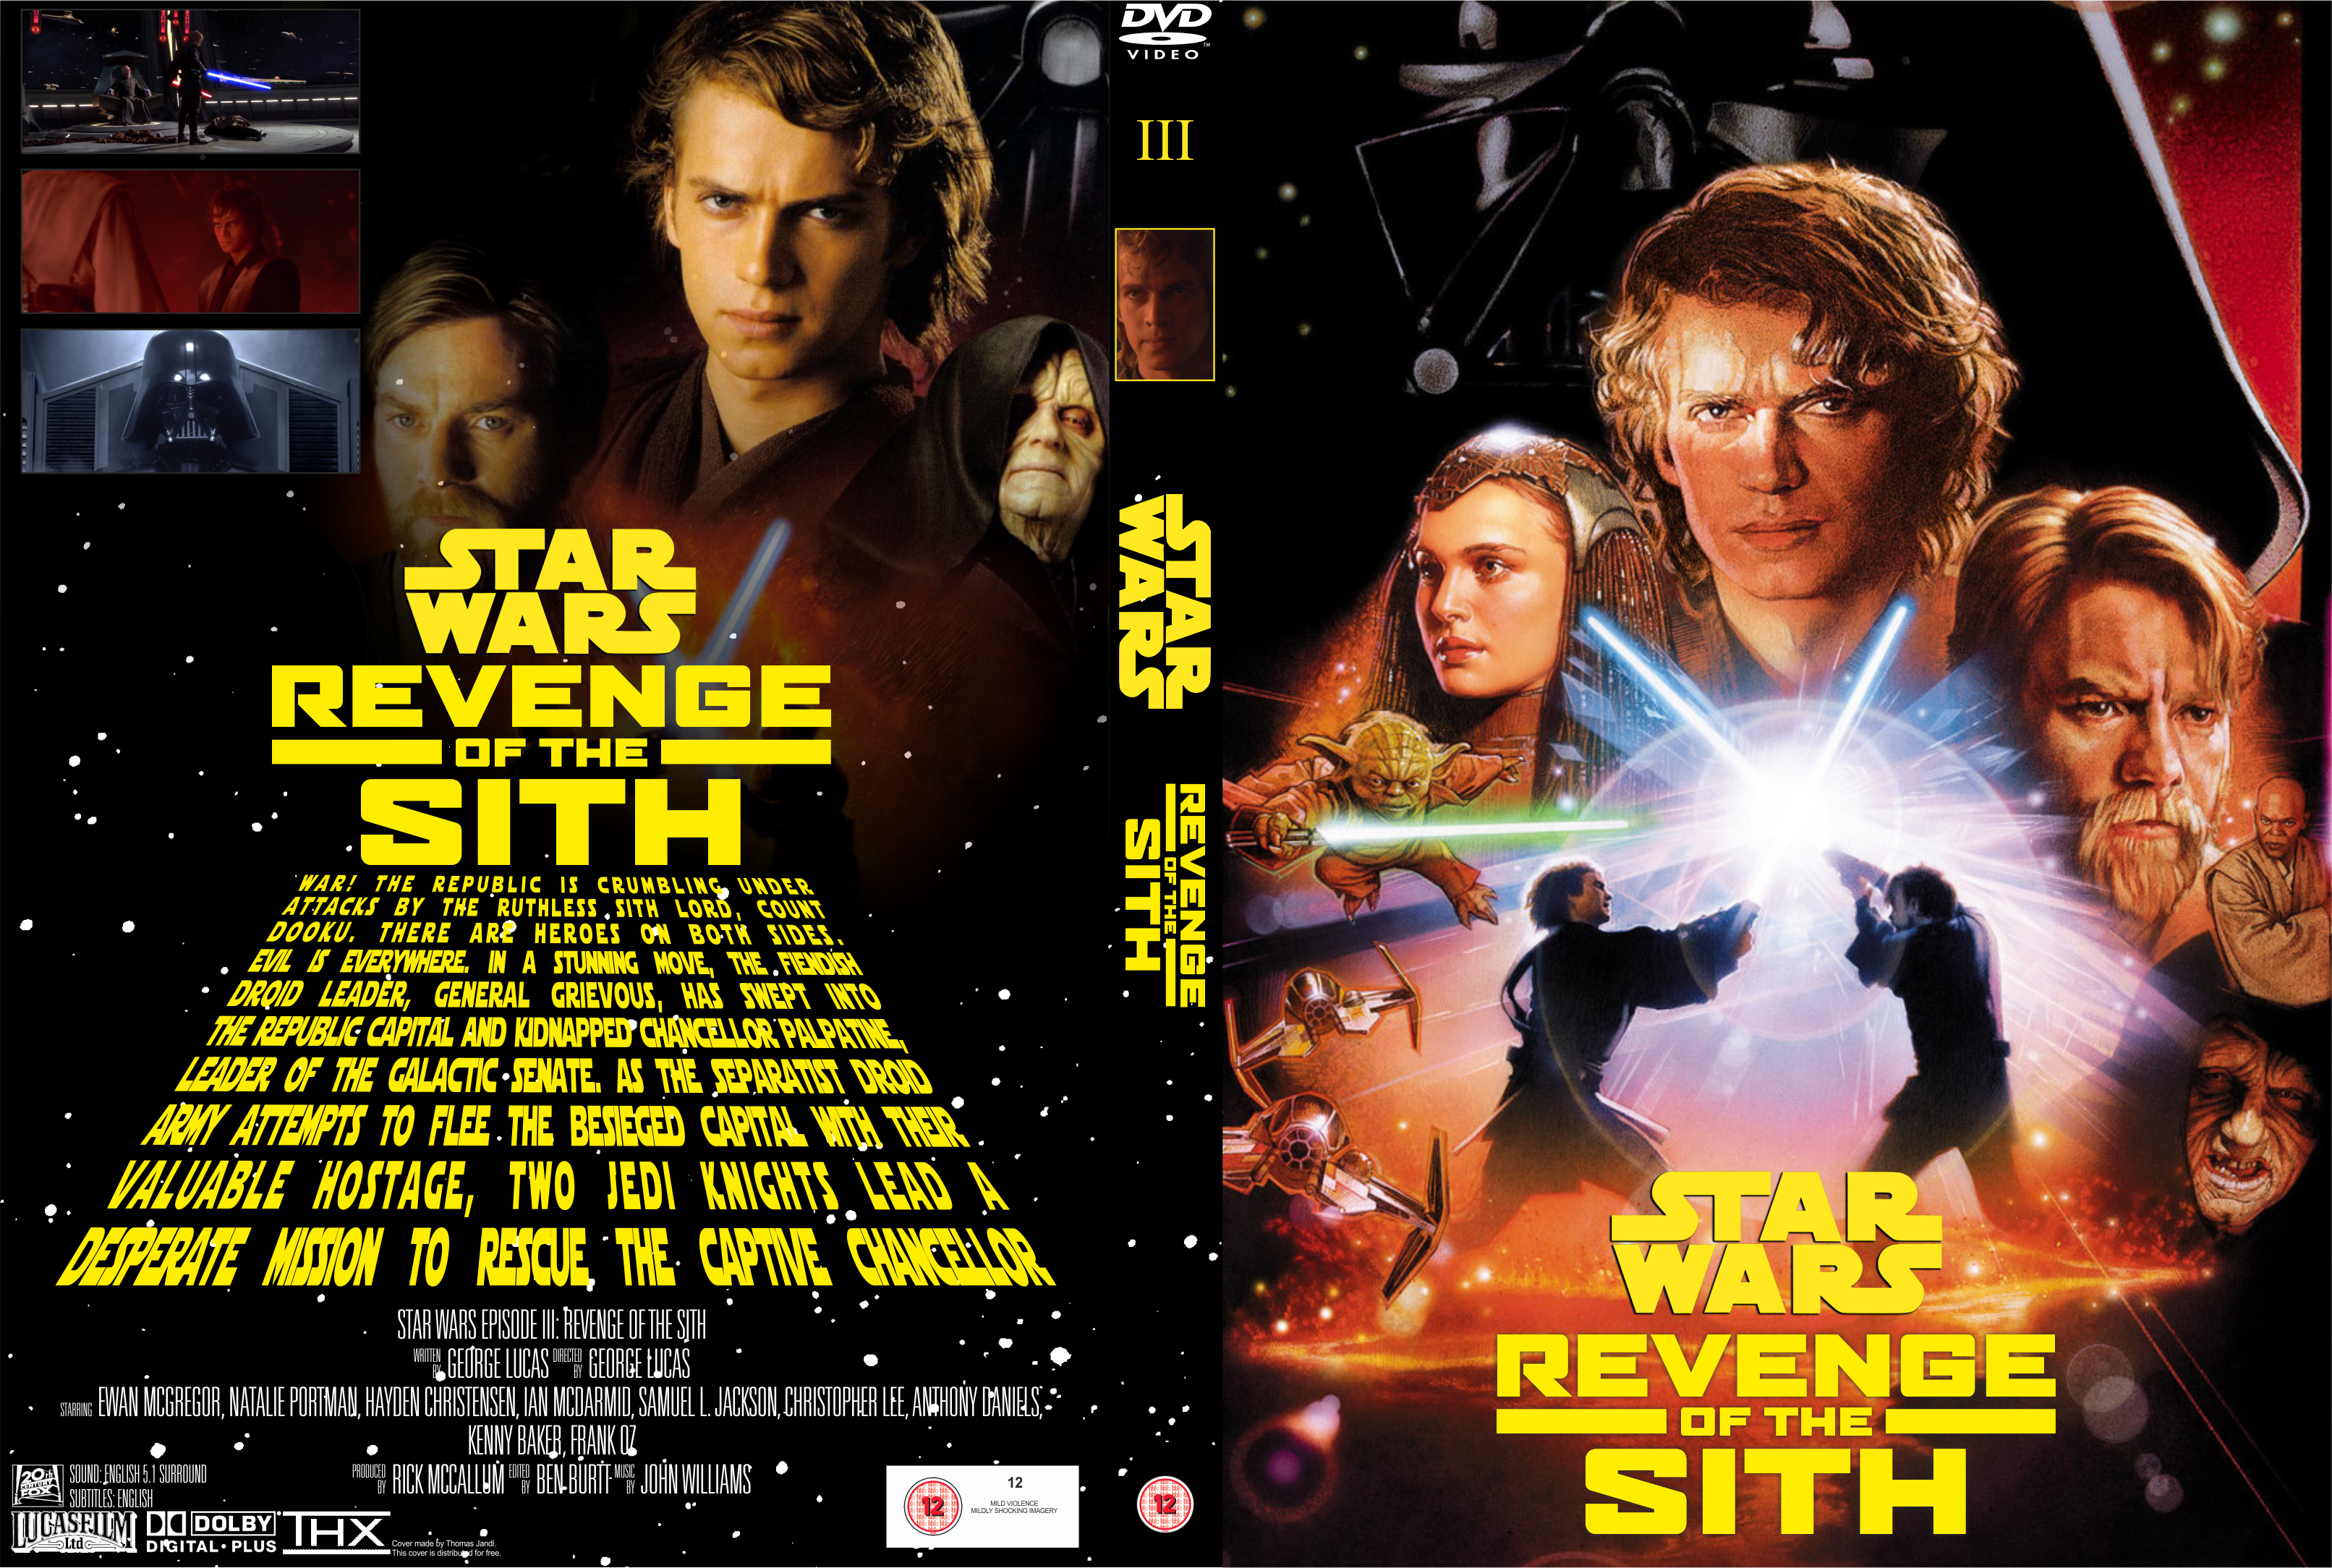 Star Wars Episode III: Revenge of the Sith, DVD Database